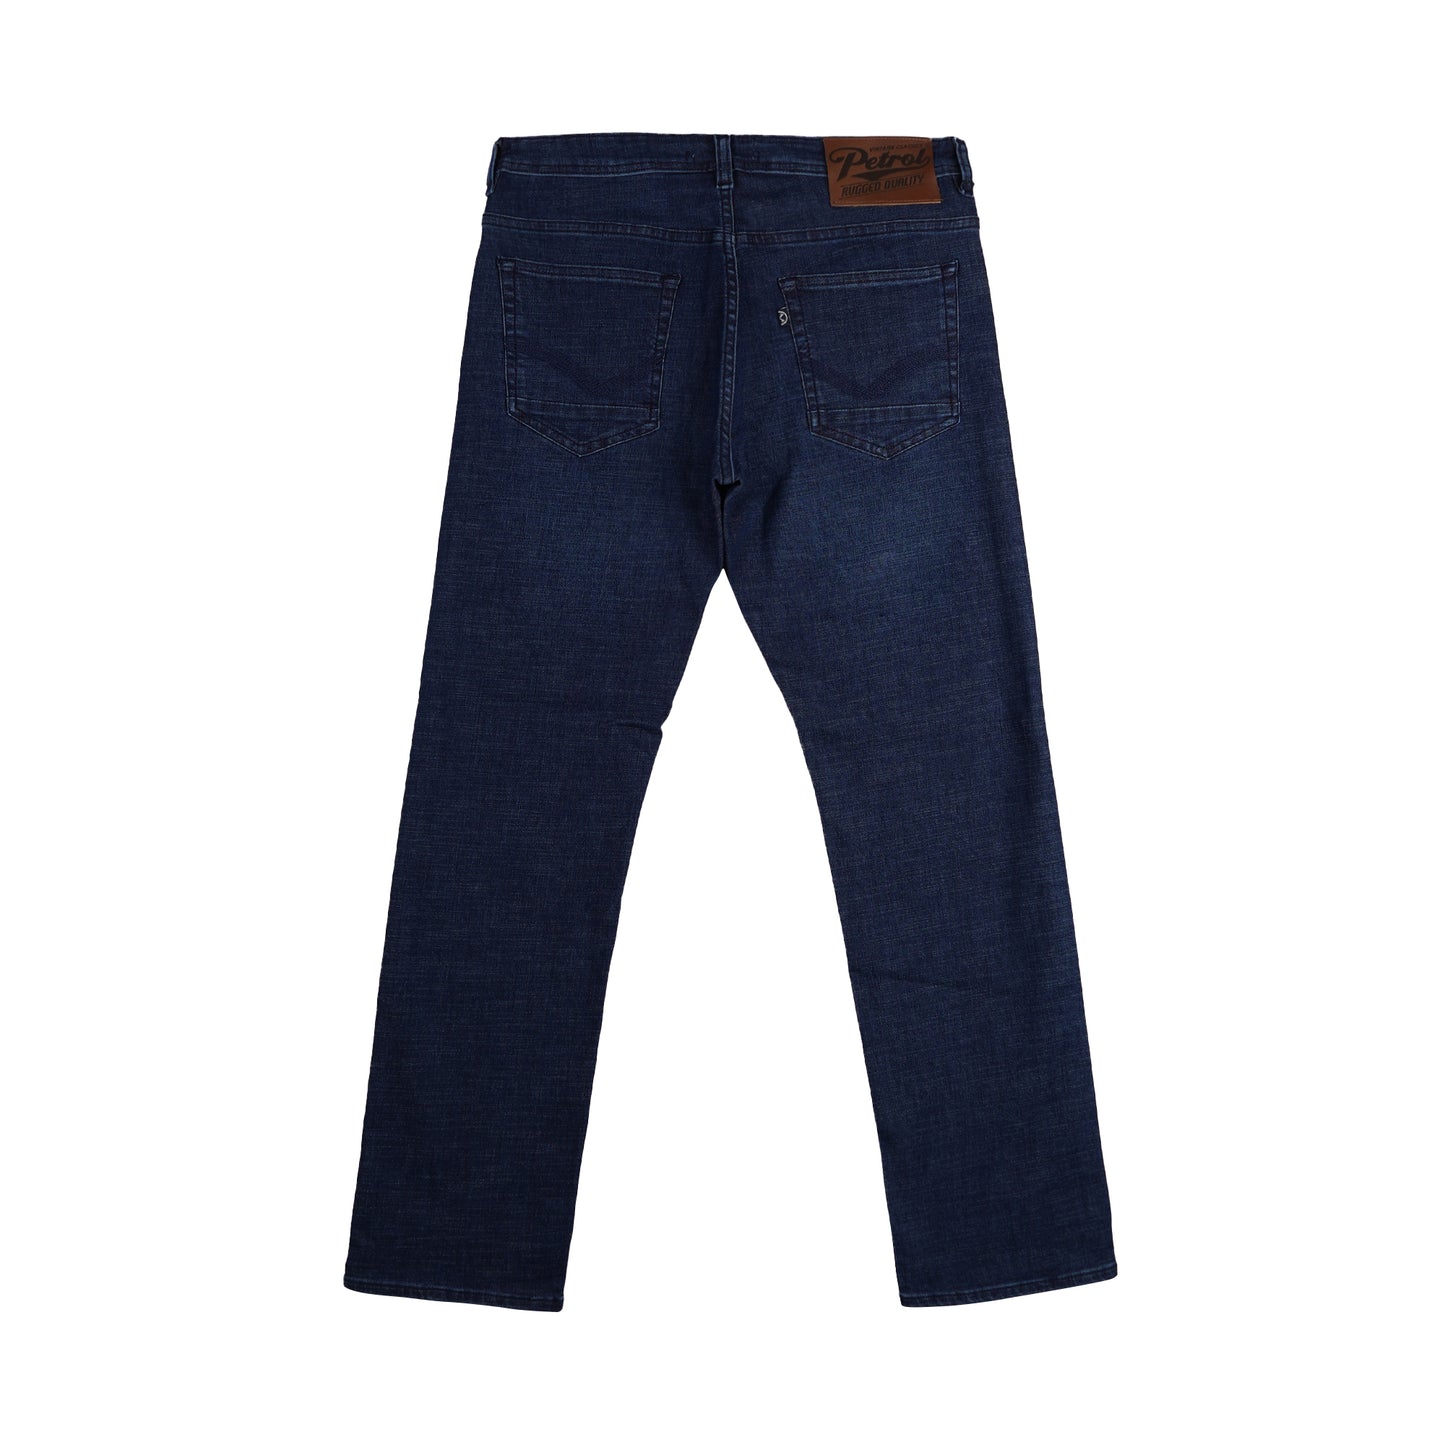 Petrol Men's Basic Denim Regular Straight Cut Fitting Mid Waist Maong Pants For Men Camellion w/ details FabricTrendy Fashion Casual Bottoms 153196 (Dark Shade)